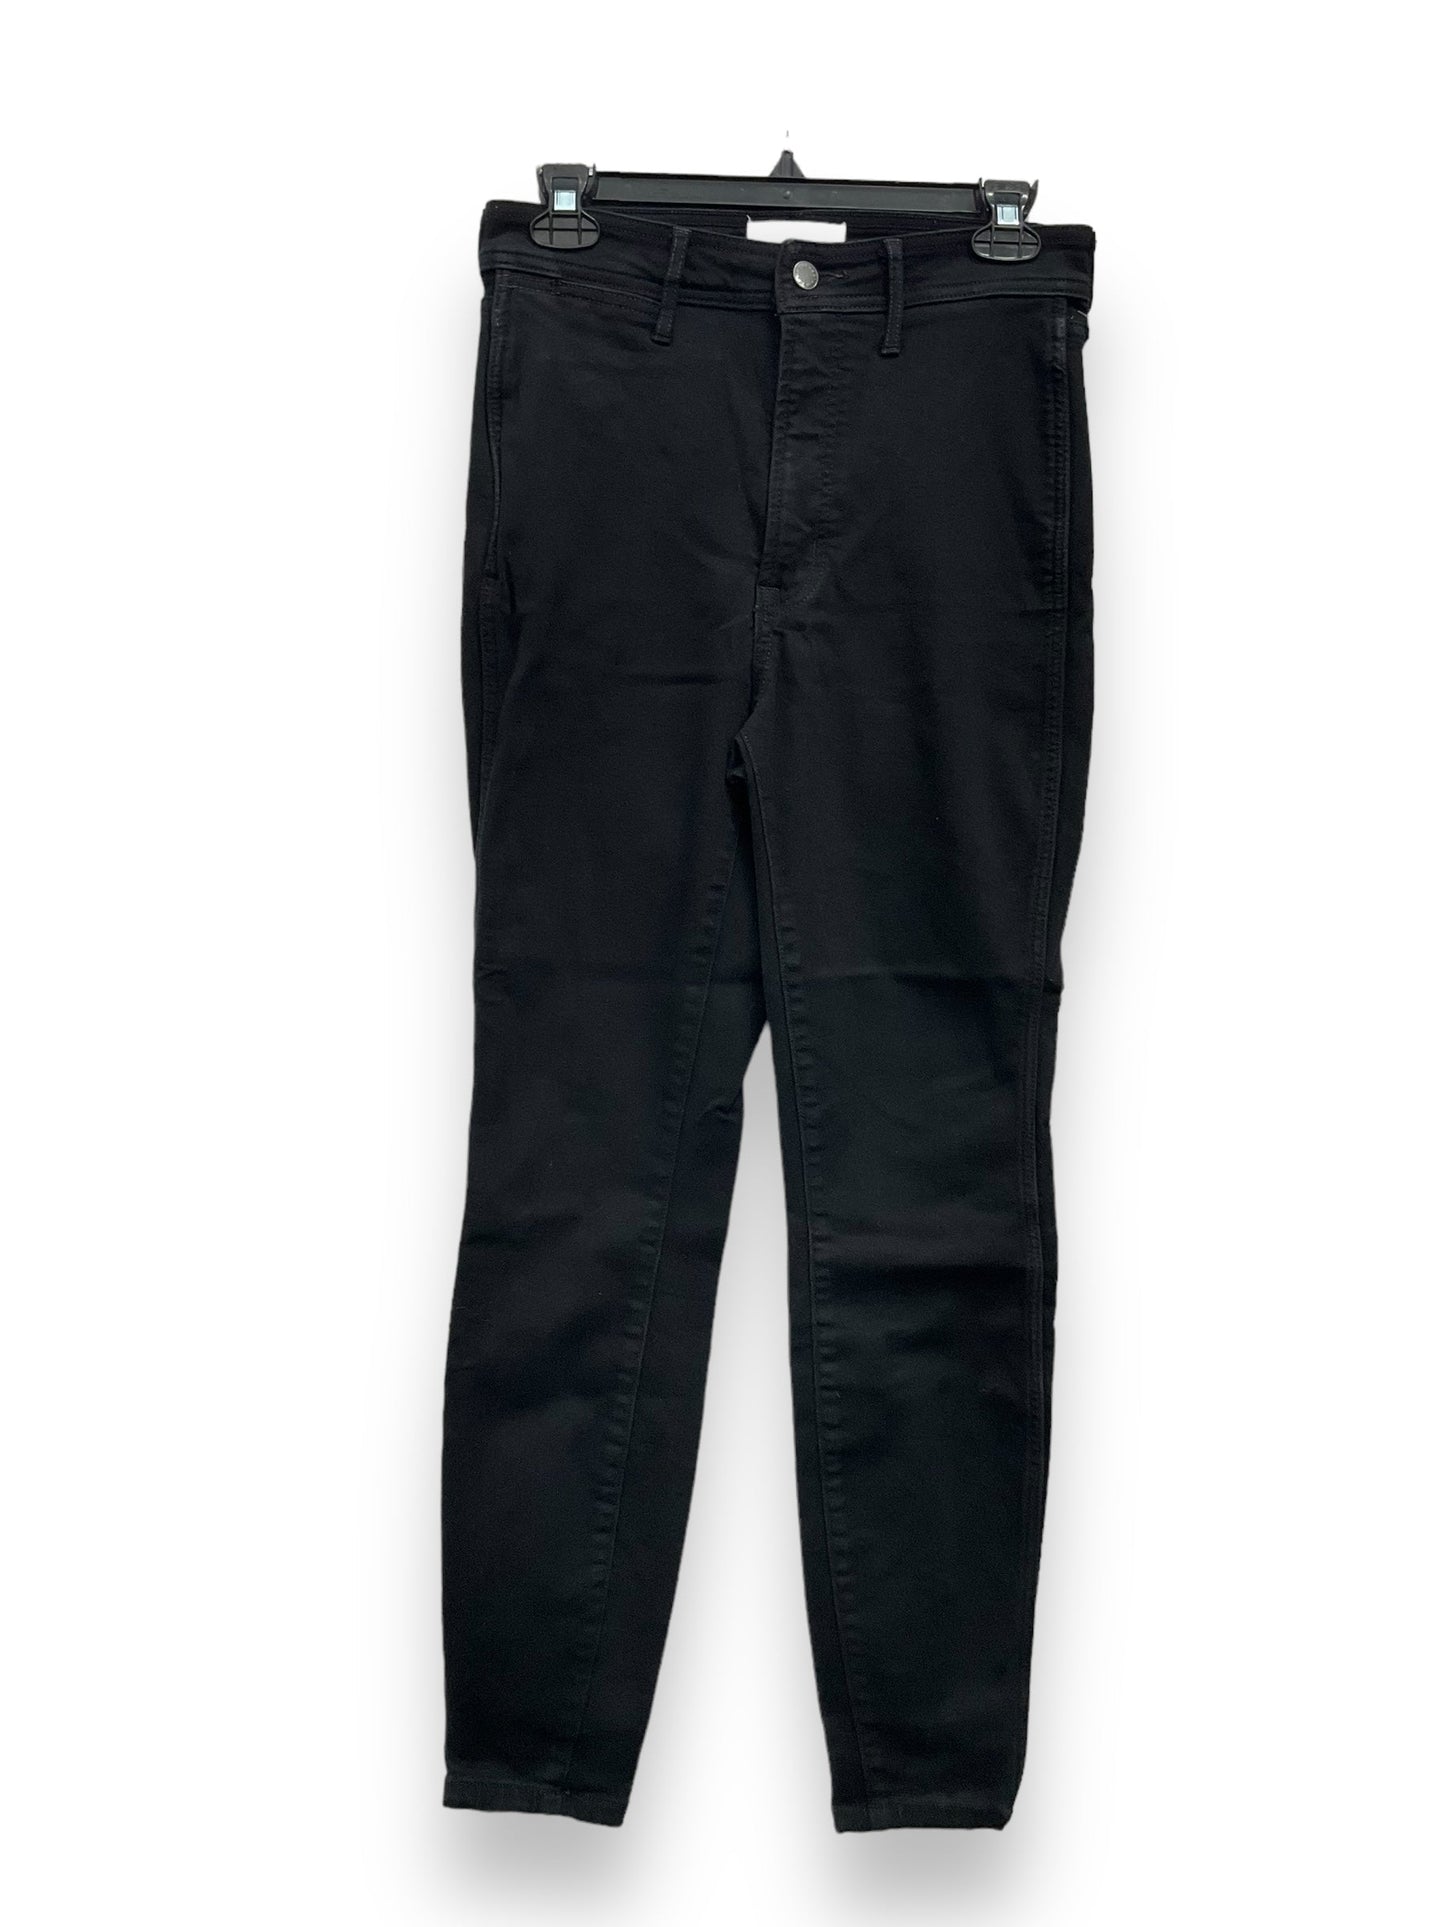 Black Jeans Skinny Everlane, Size 8